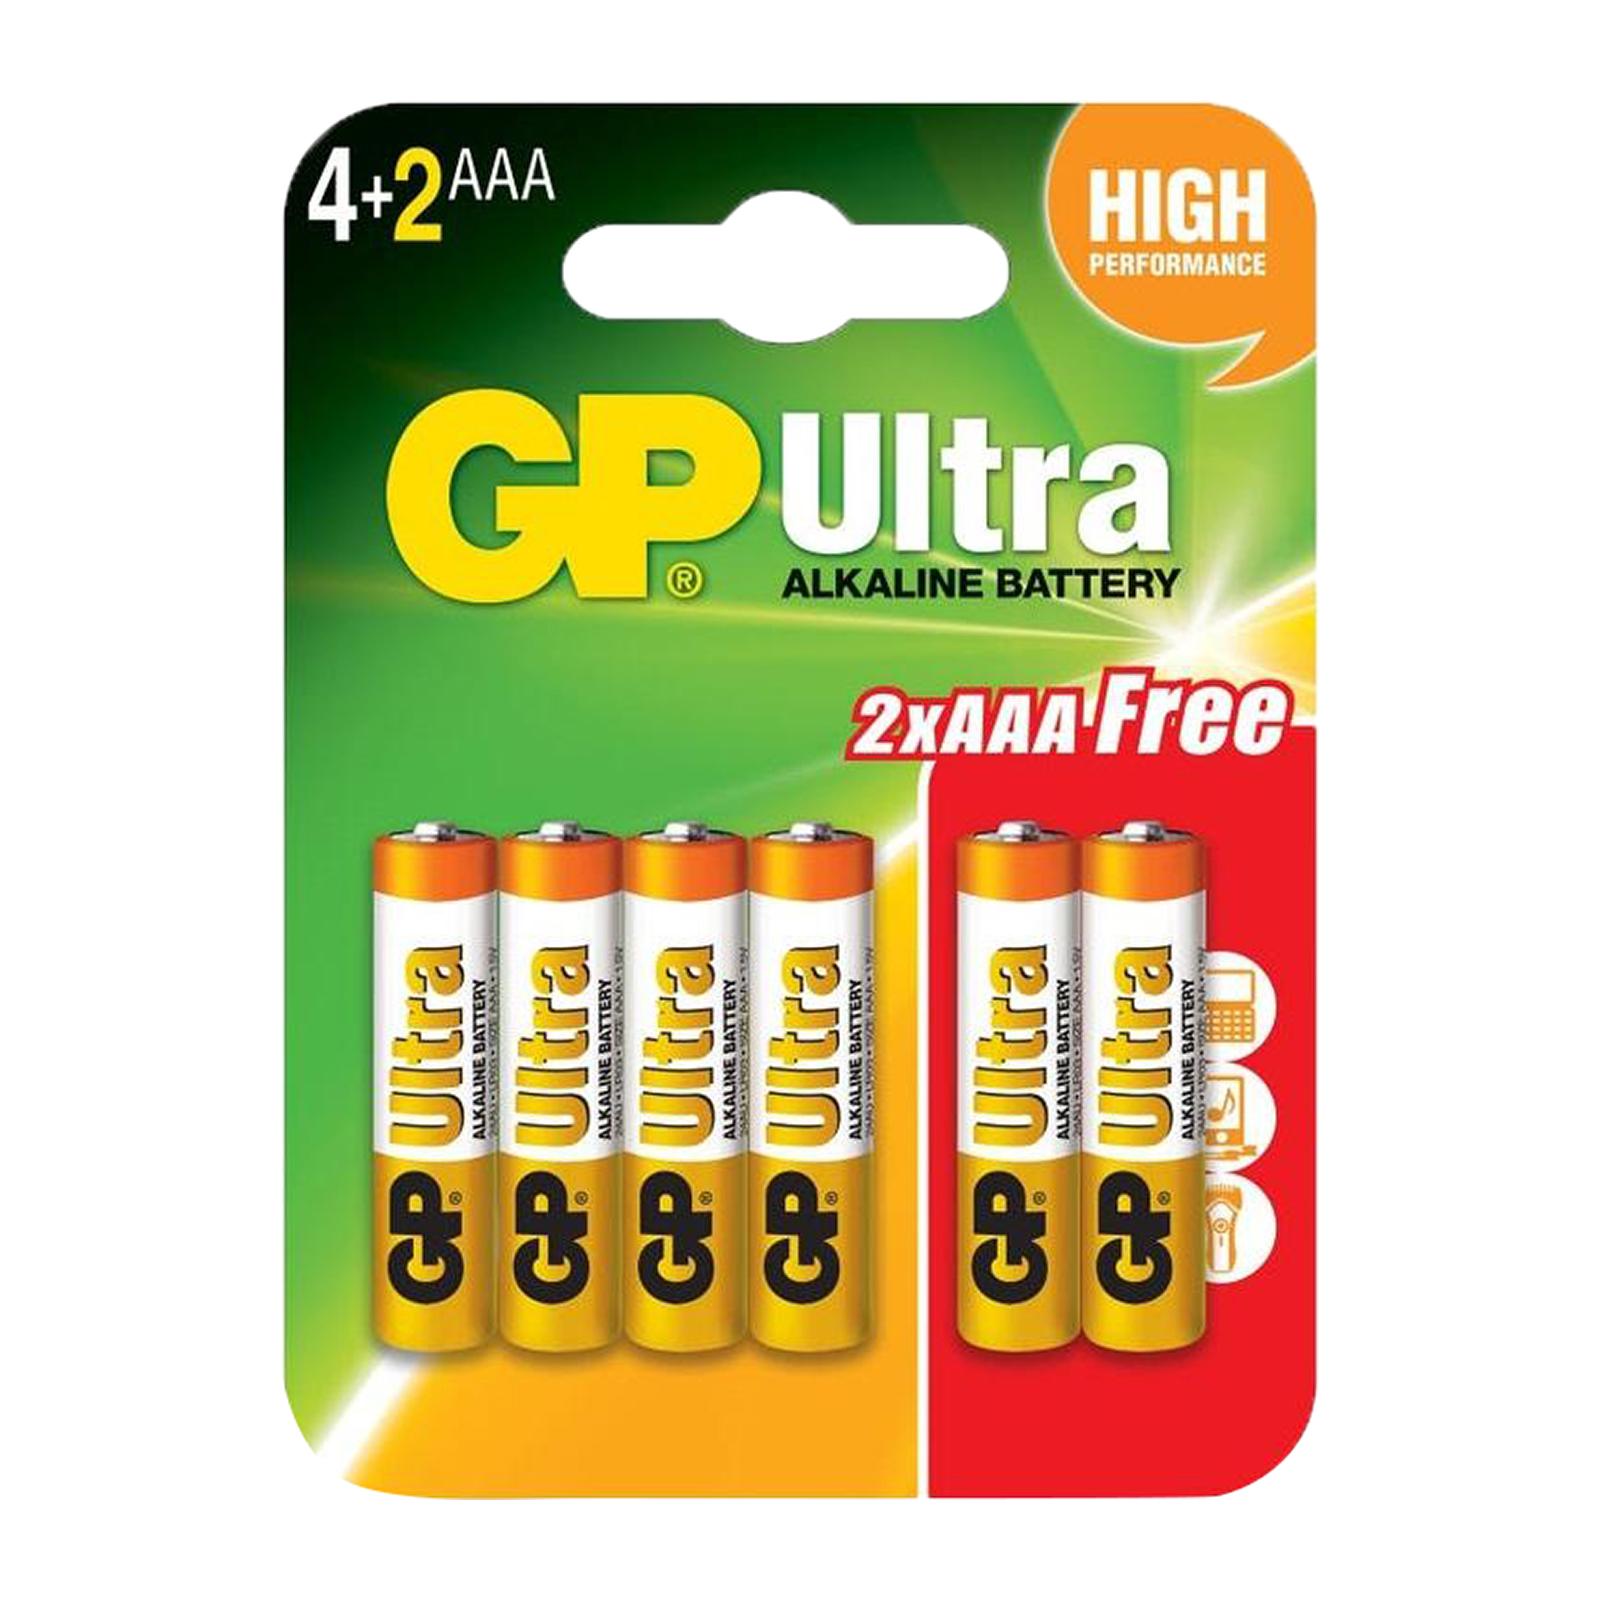 Gp alkaline battery. Батарейки Alkaline AAA. Батарейка GP Ultra 24au4/2-2cr6 AAA 1,5 В, 6шт/упак. Power Ultra Alkaline. Подойдут ли аккумуляторы GP Ultra к радиоприемнику Смик кк9.